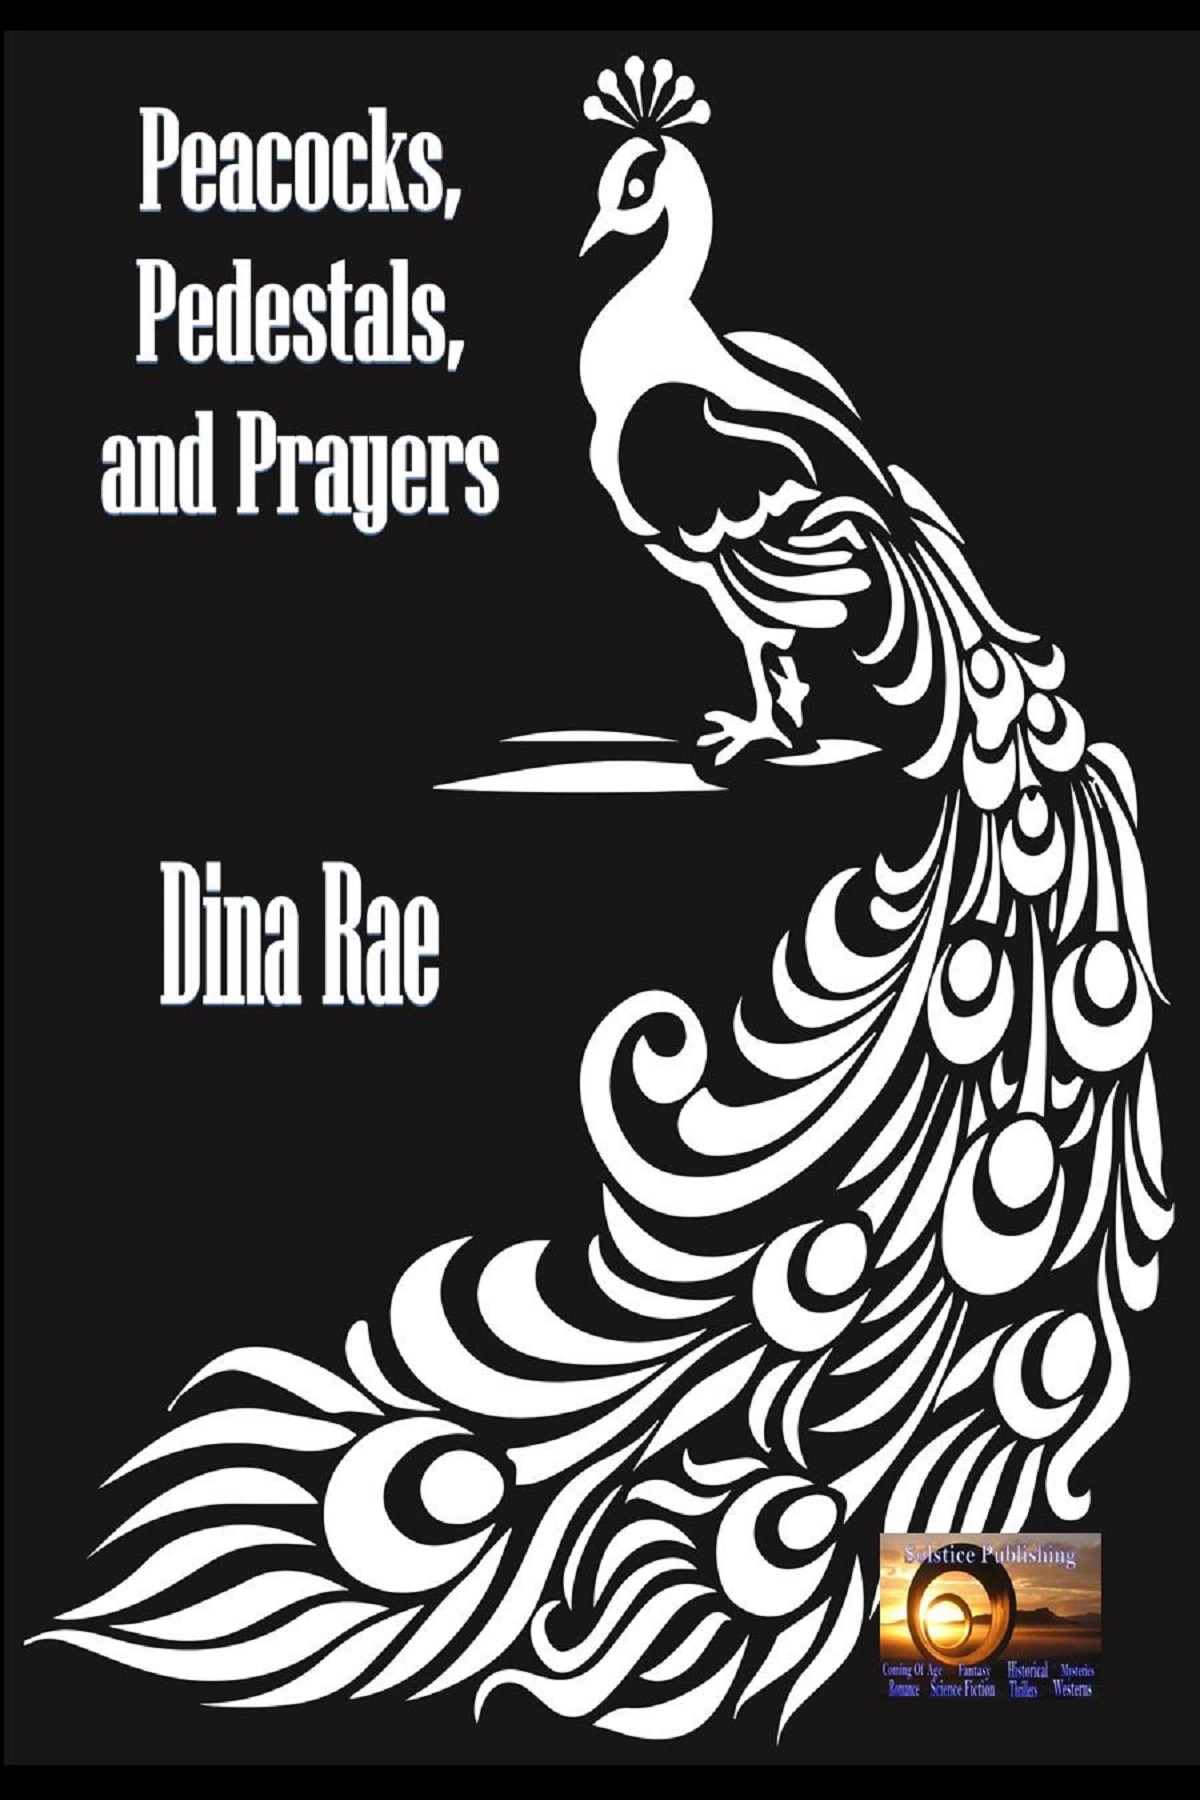 FREE: Peacocks, Pedestals, and Prayers by Dina Rae